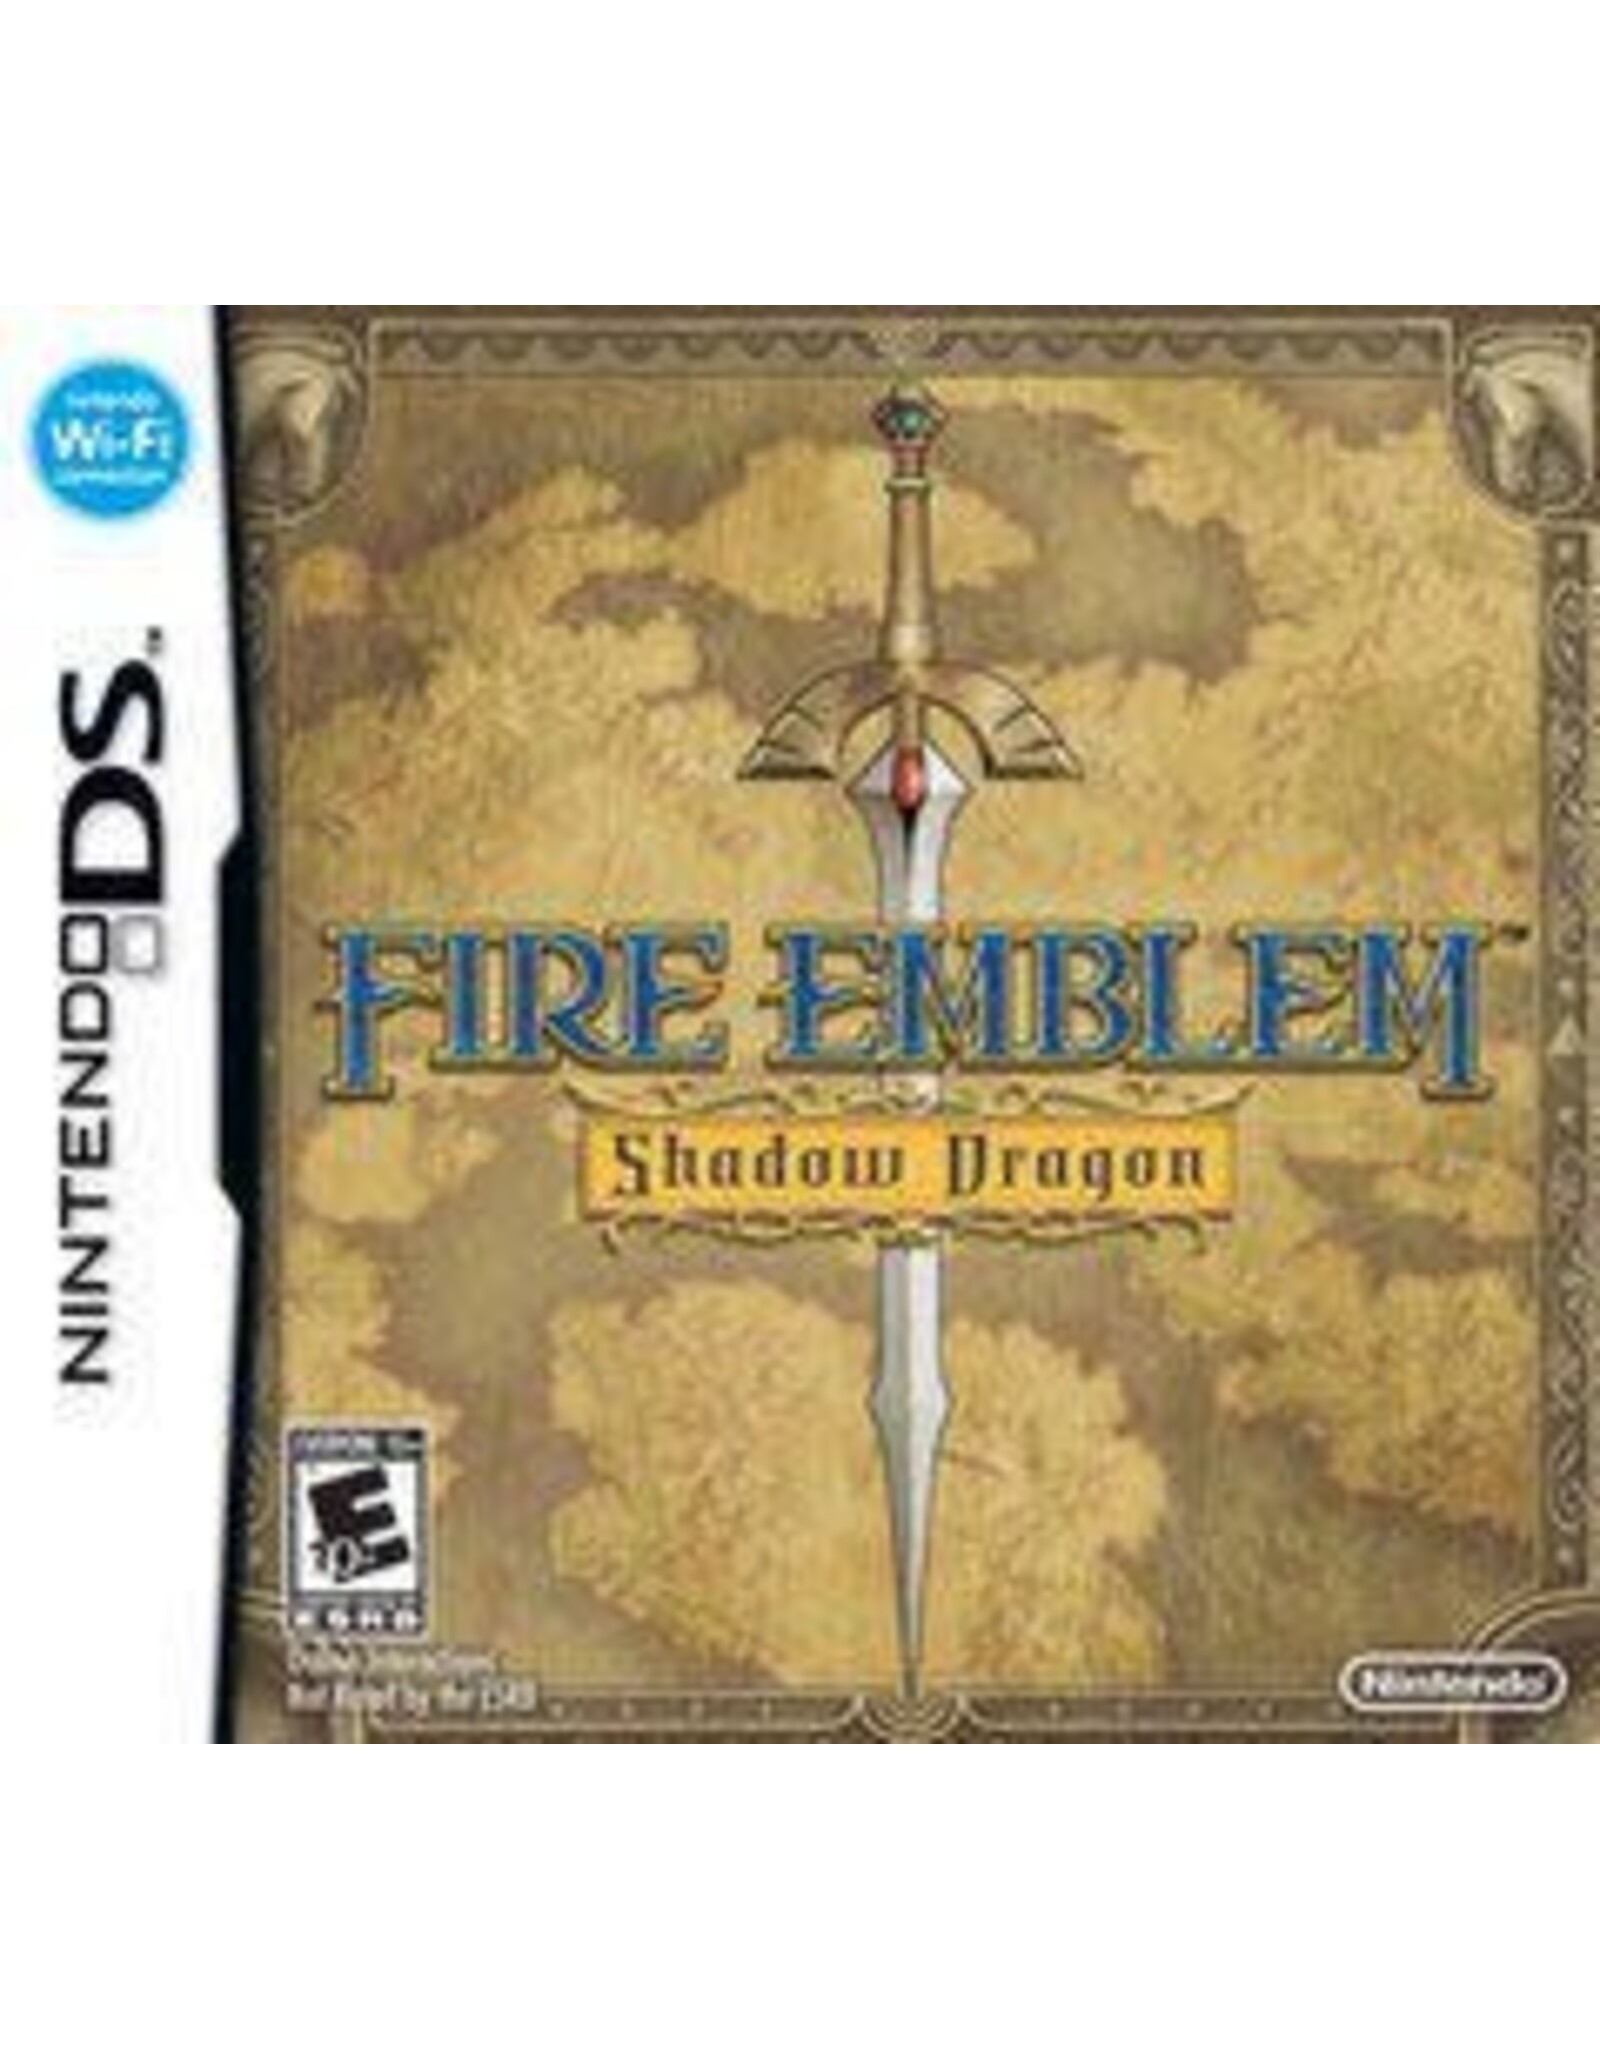 Nintendo DS Fire Emblem Shadow Dragon (Brand New)